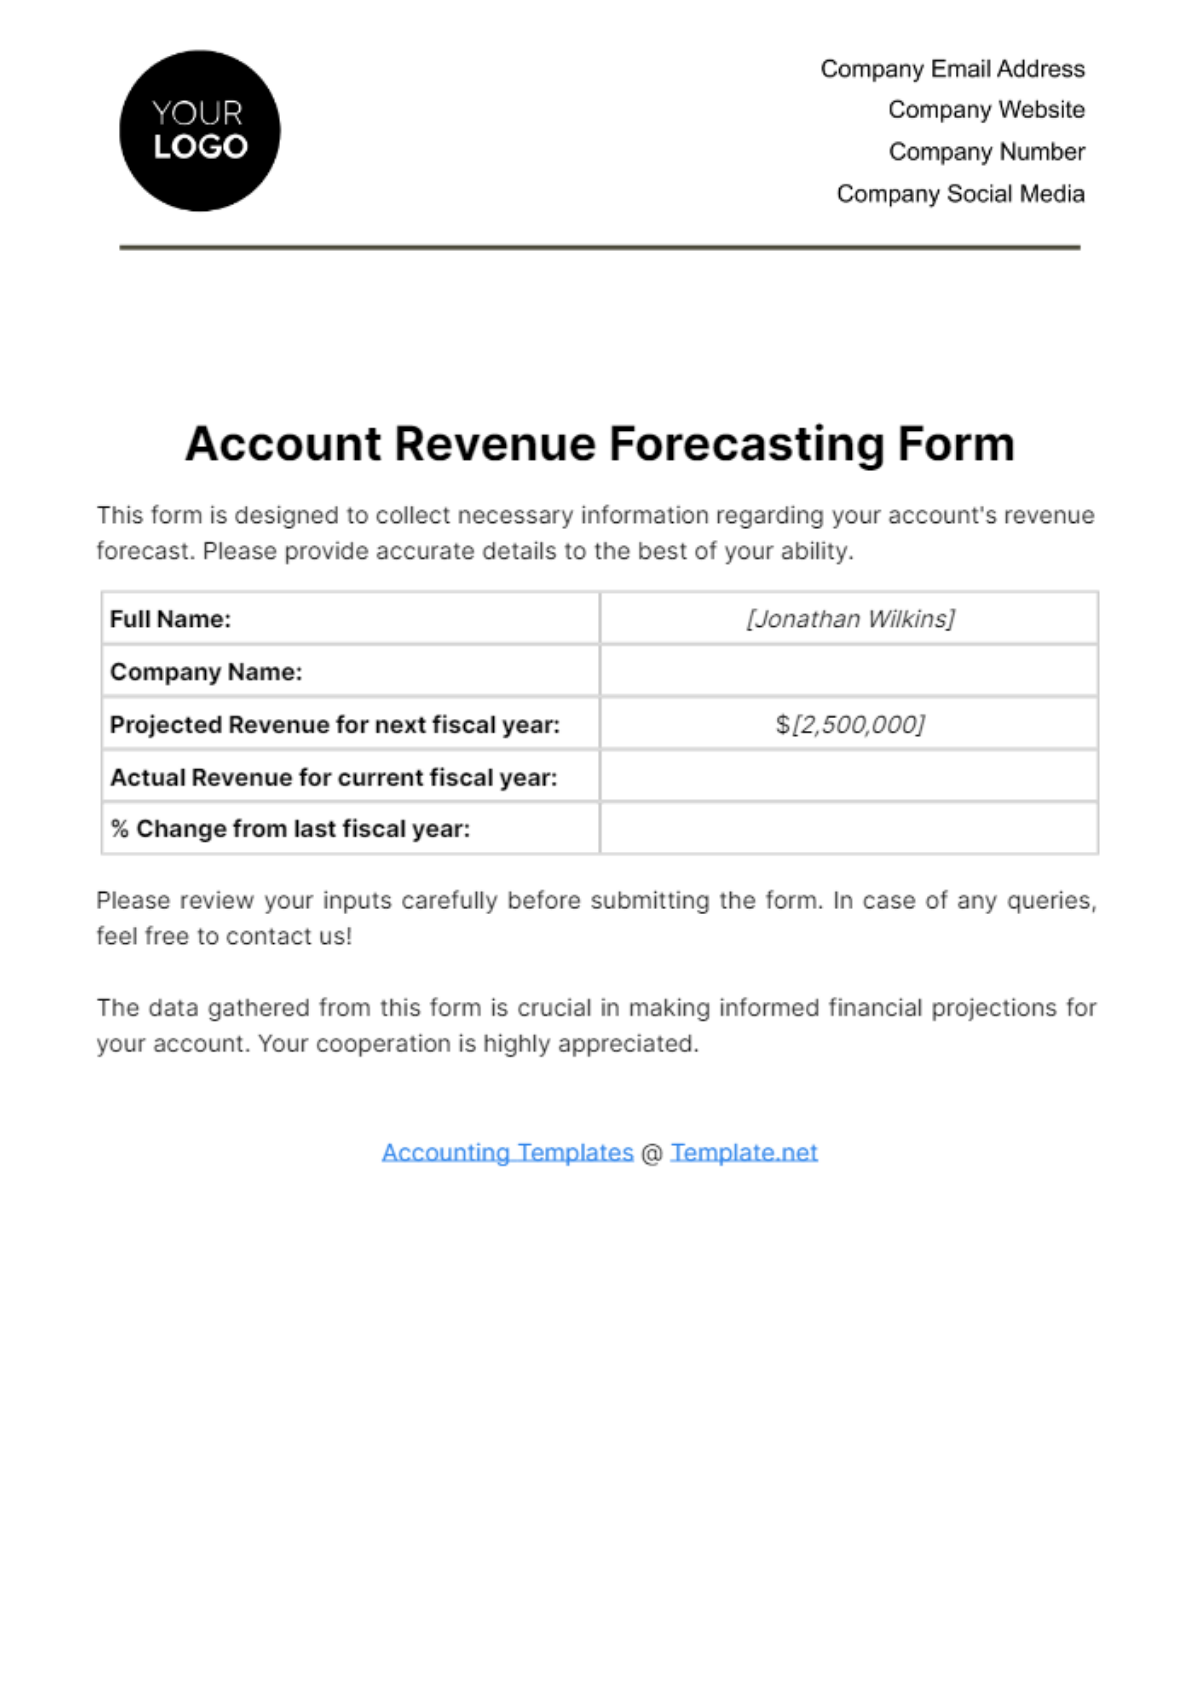 Free Account Revenue Forecasting Form Template